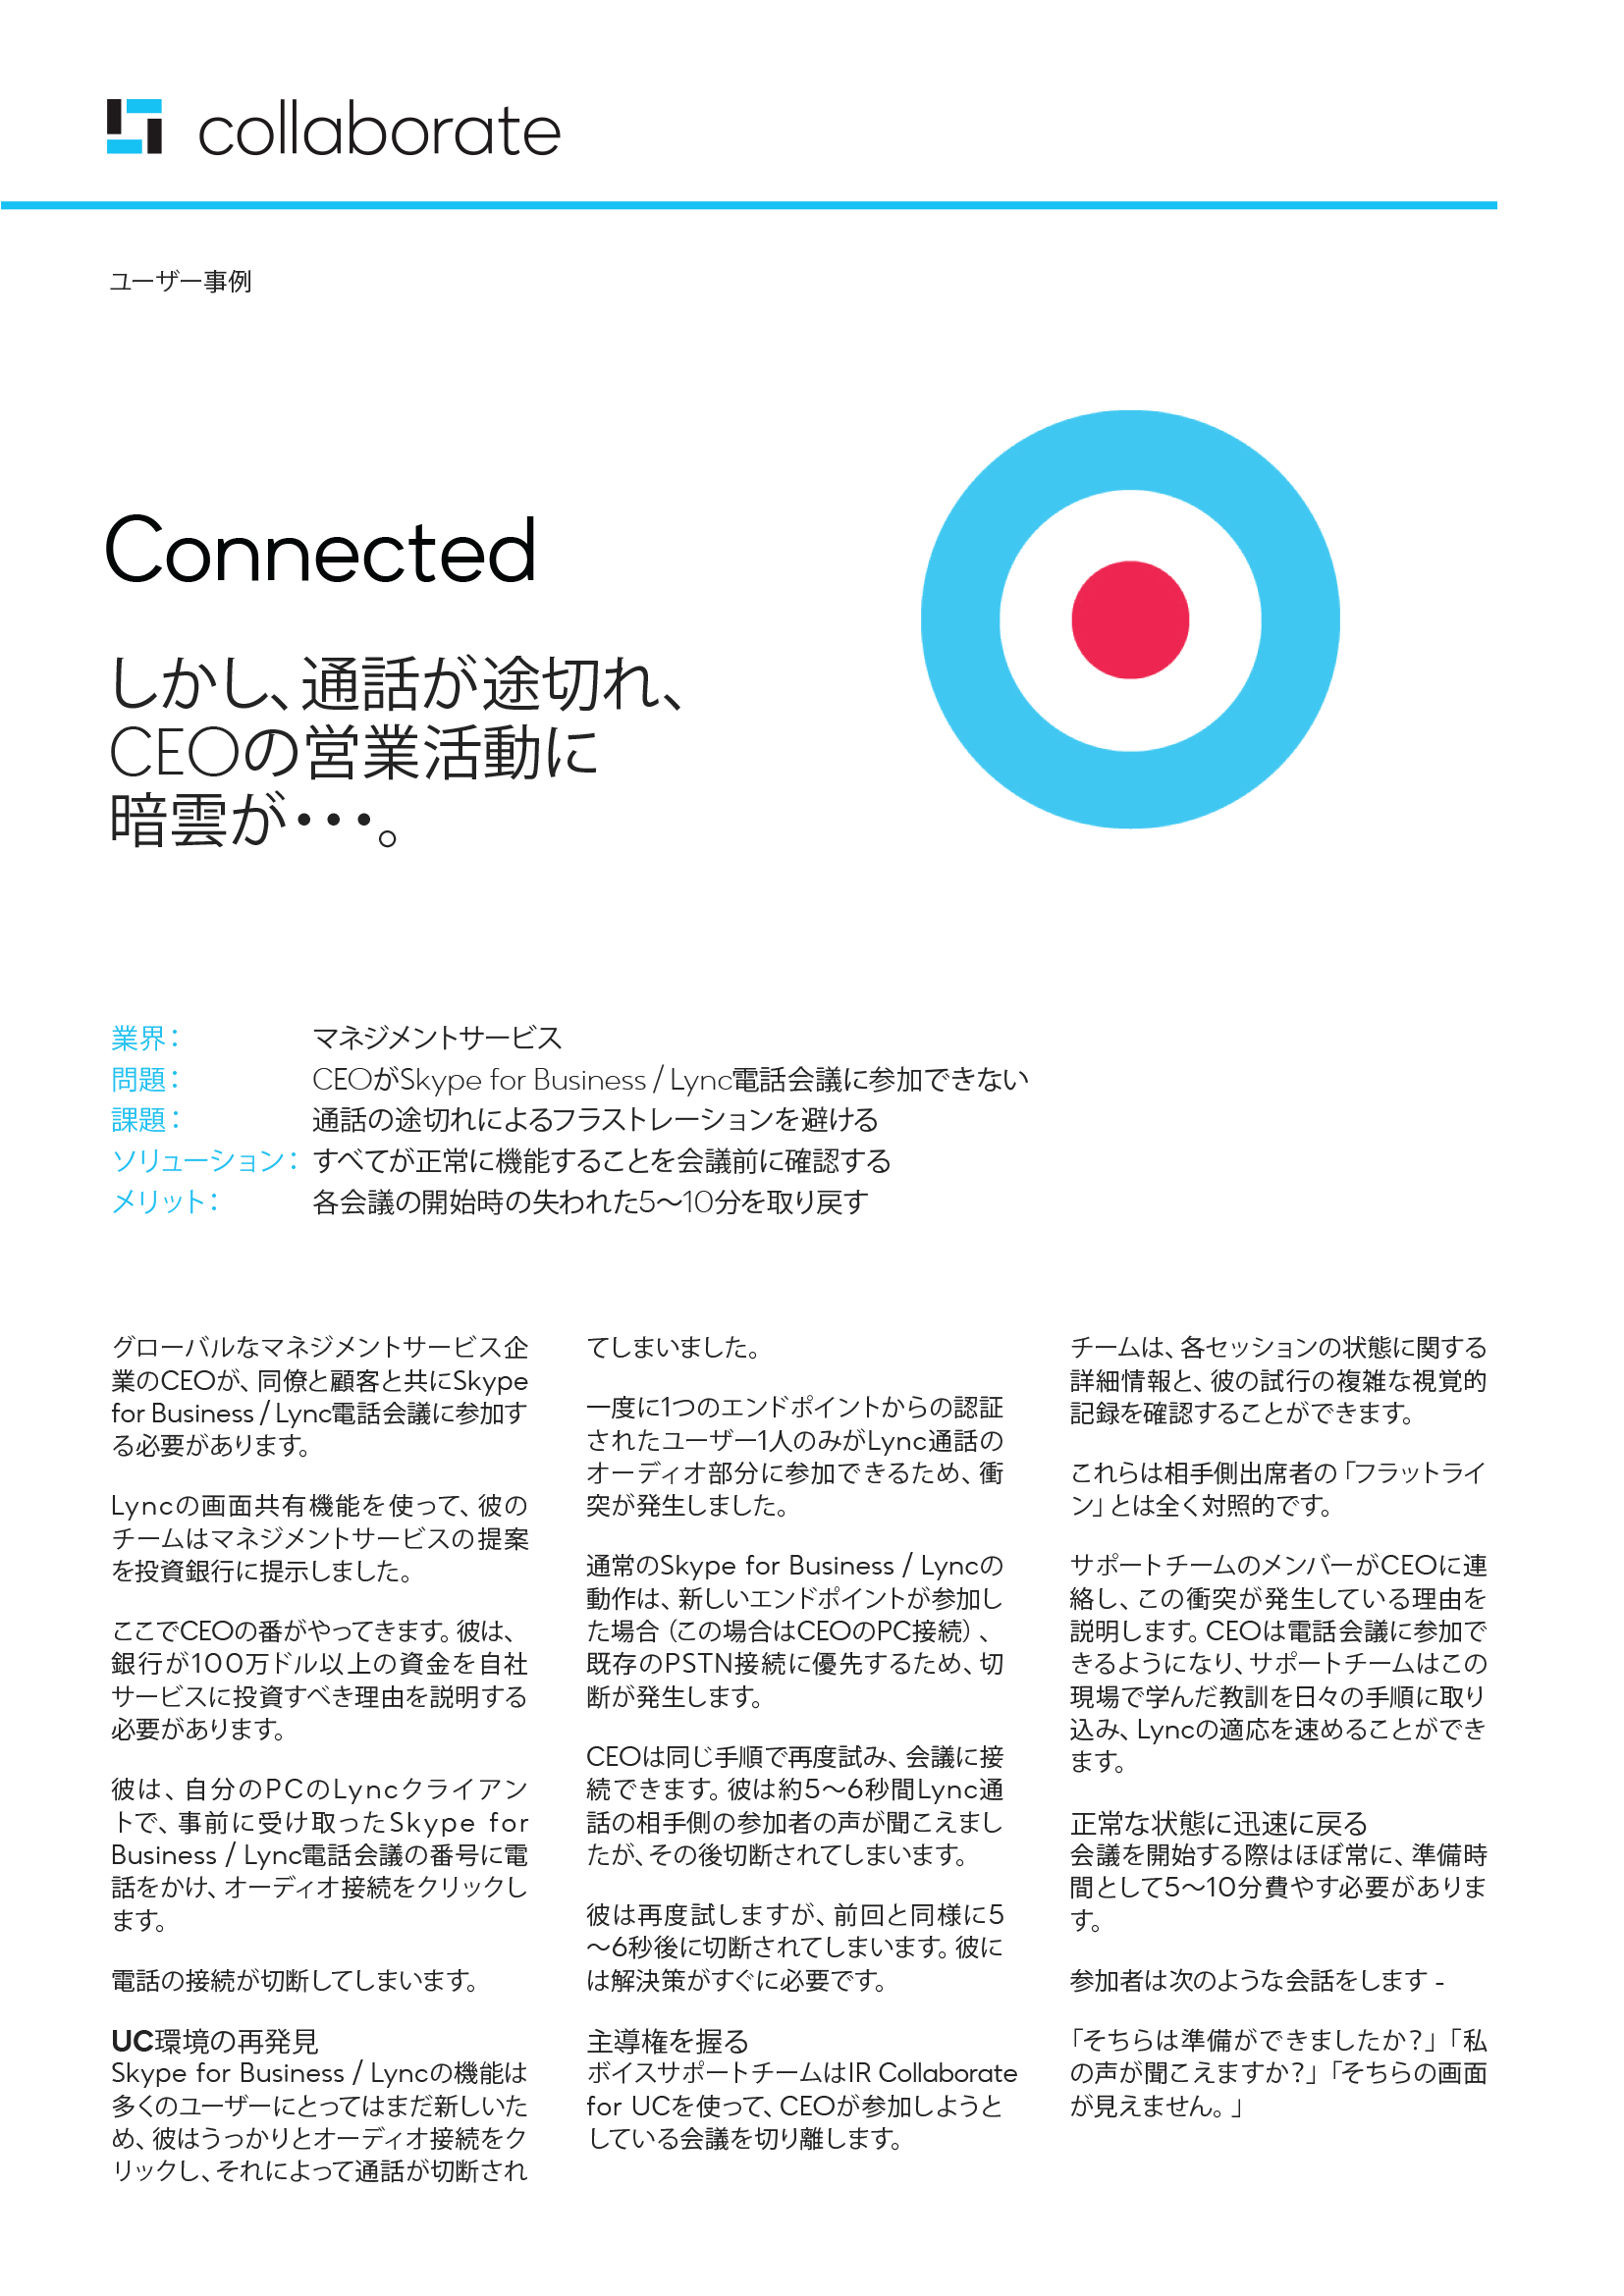 R-Japanese-Collaborate-Brochure-Skype-for-Business-v2-1